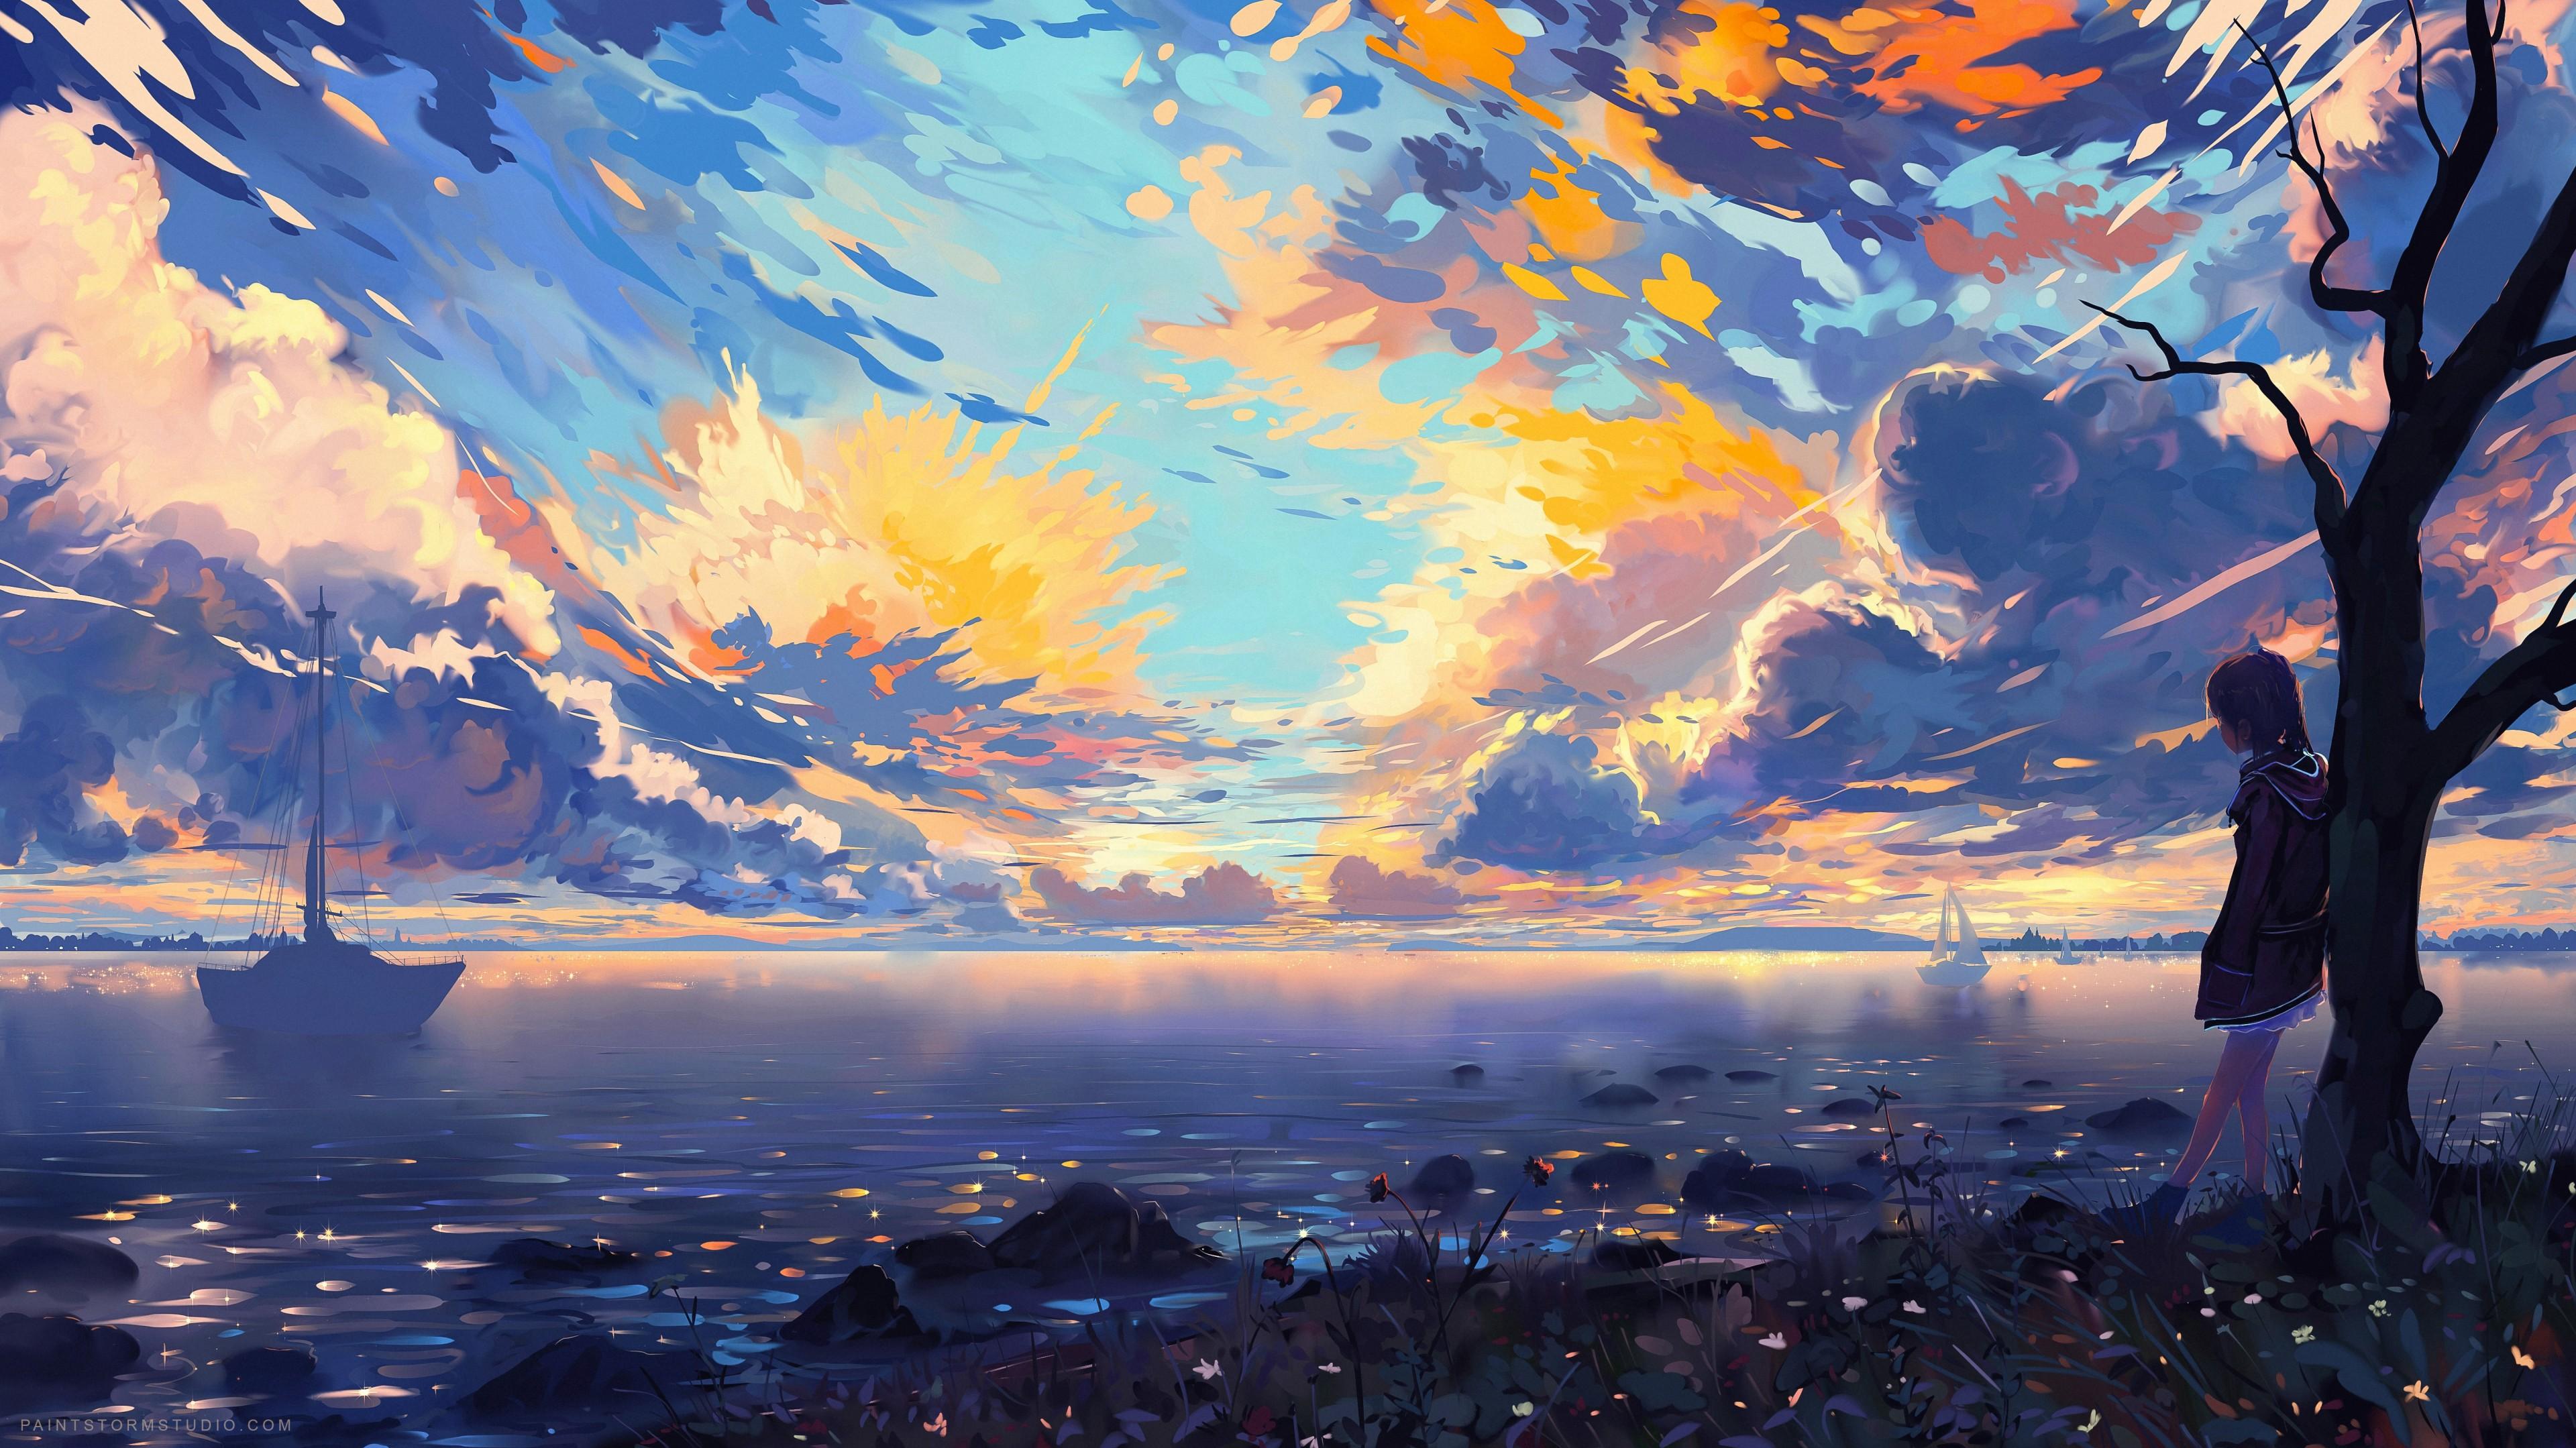 Anime Landscape for Desktop Sea Ships Colorful Clouds Scenic Tree